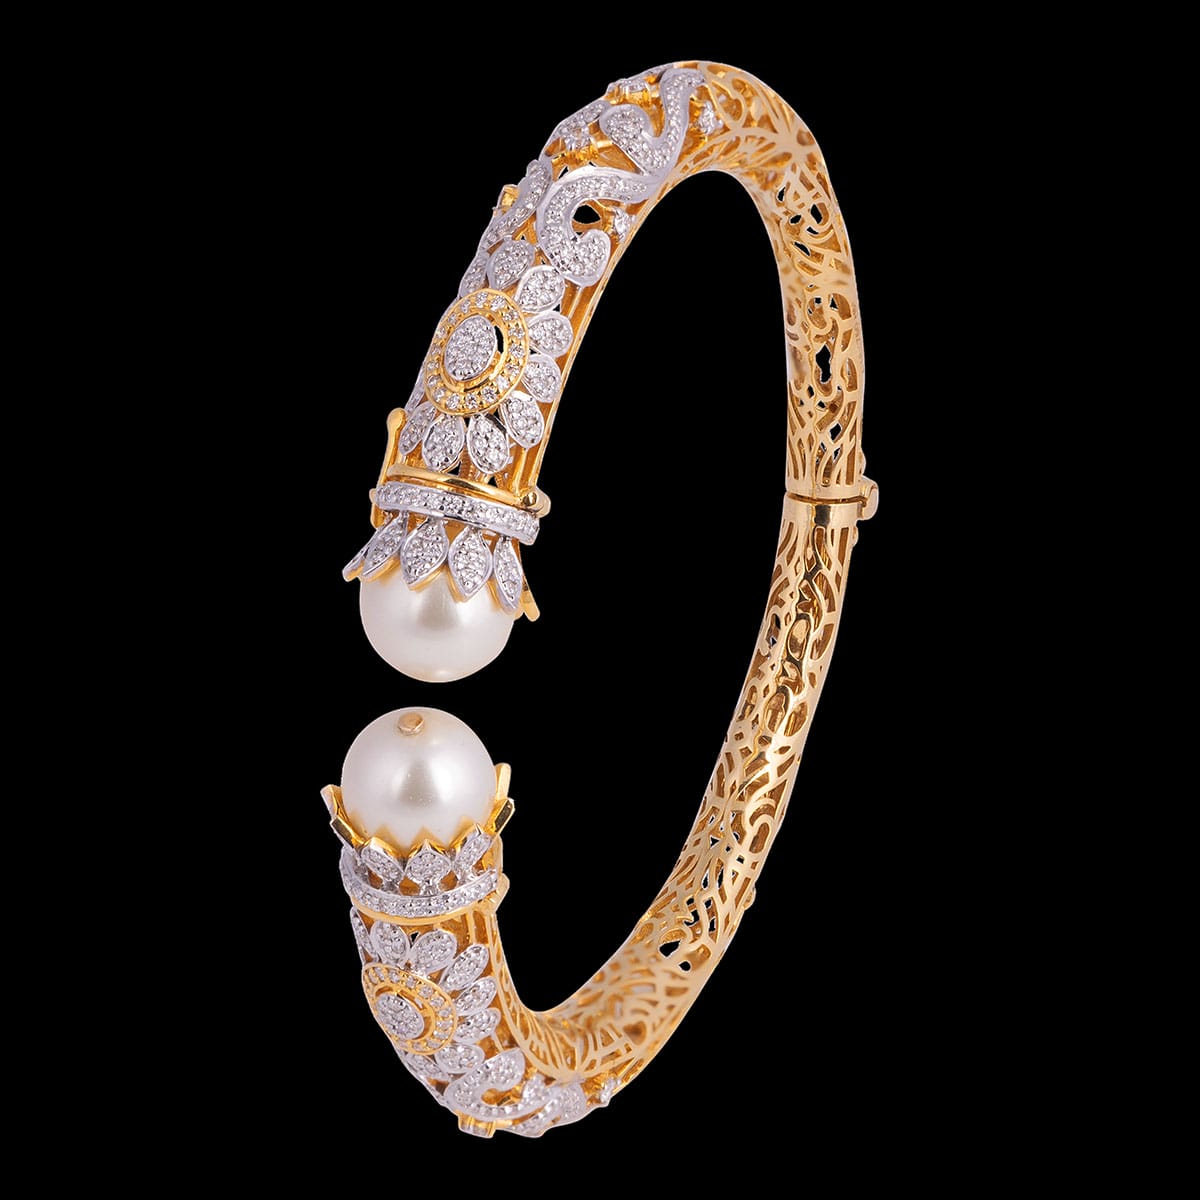 Weaves of magic diamond bracelet with pearls.